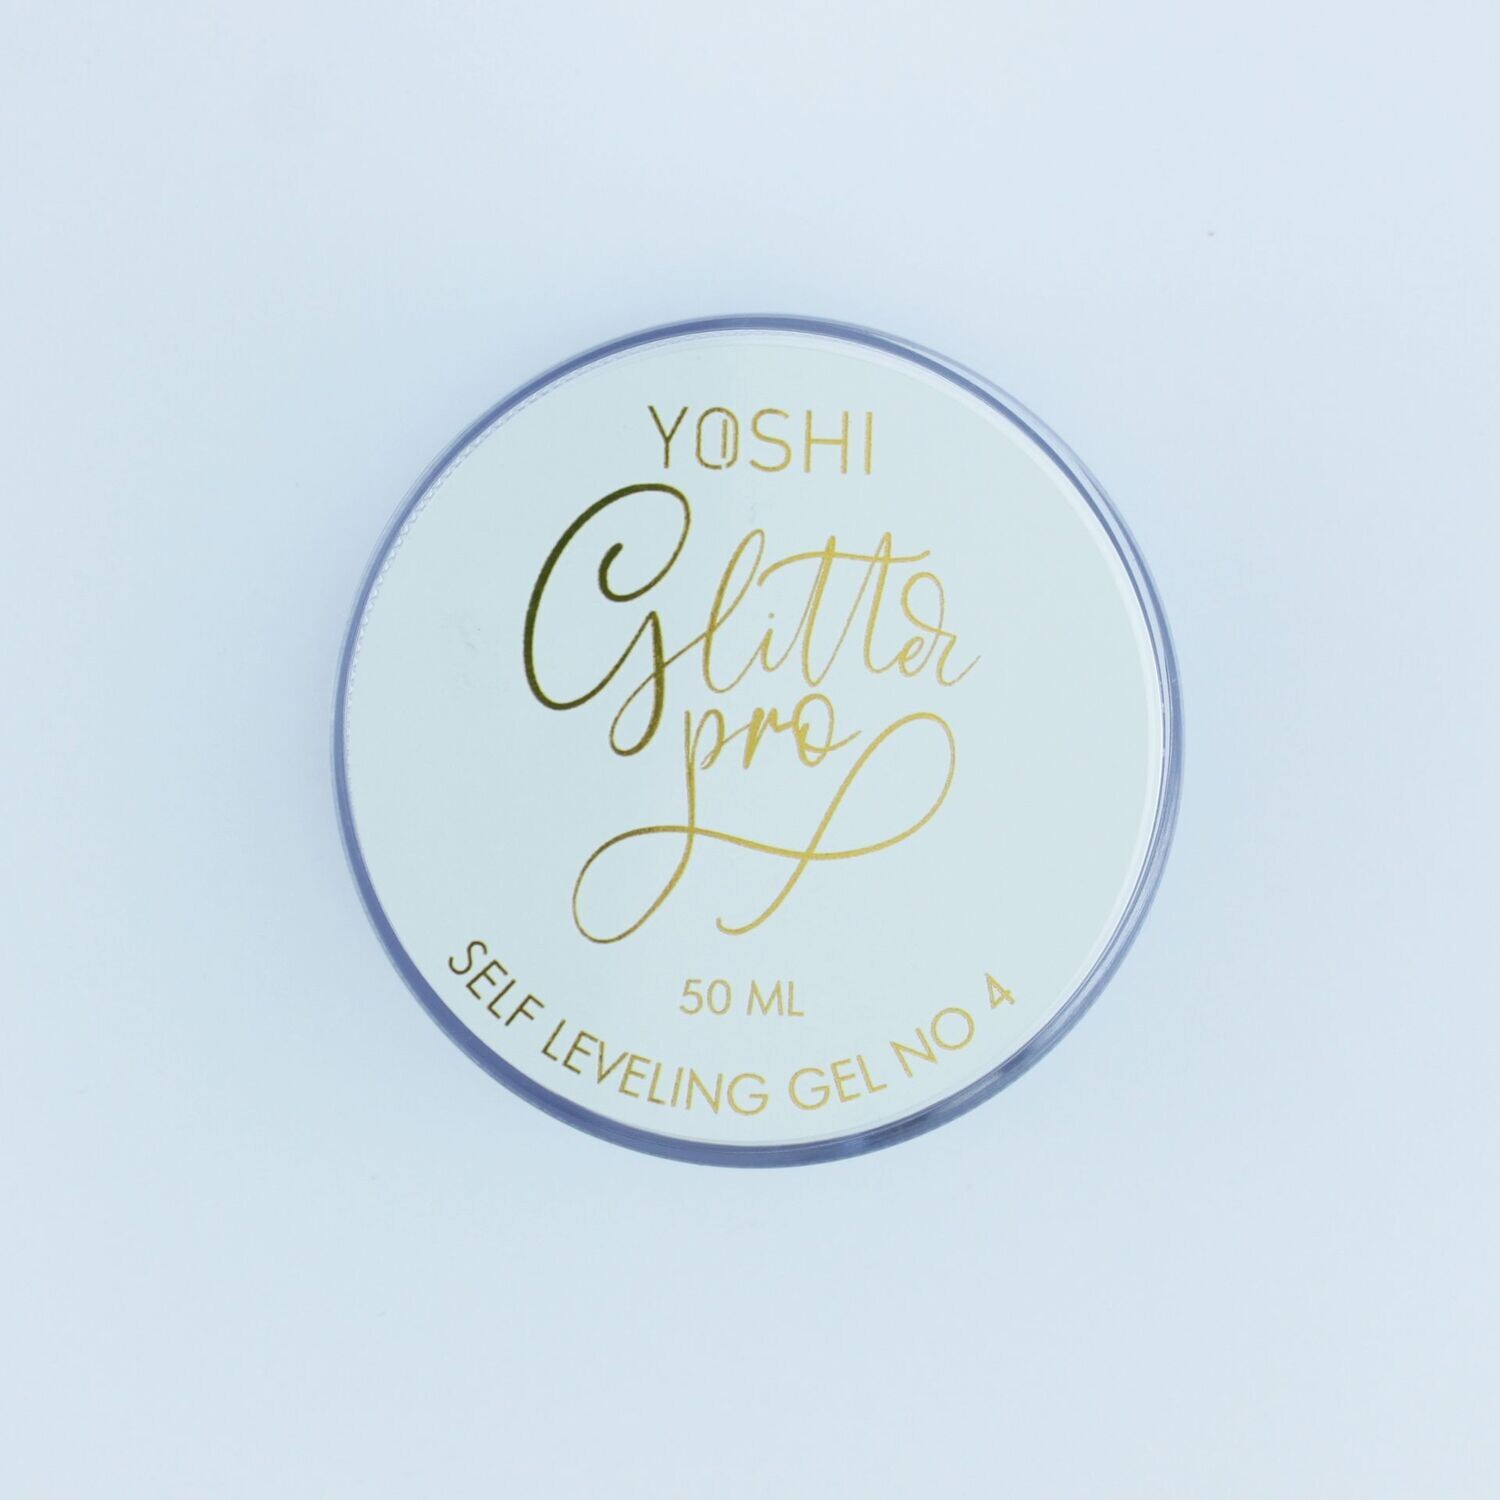 Yoshi Glitter Pro Uv Gel Self Leveling No4 15 ml